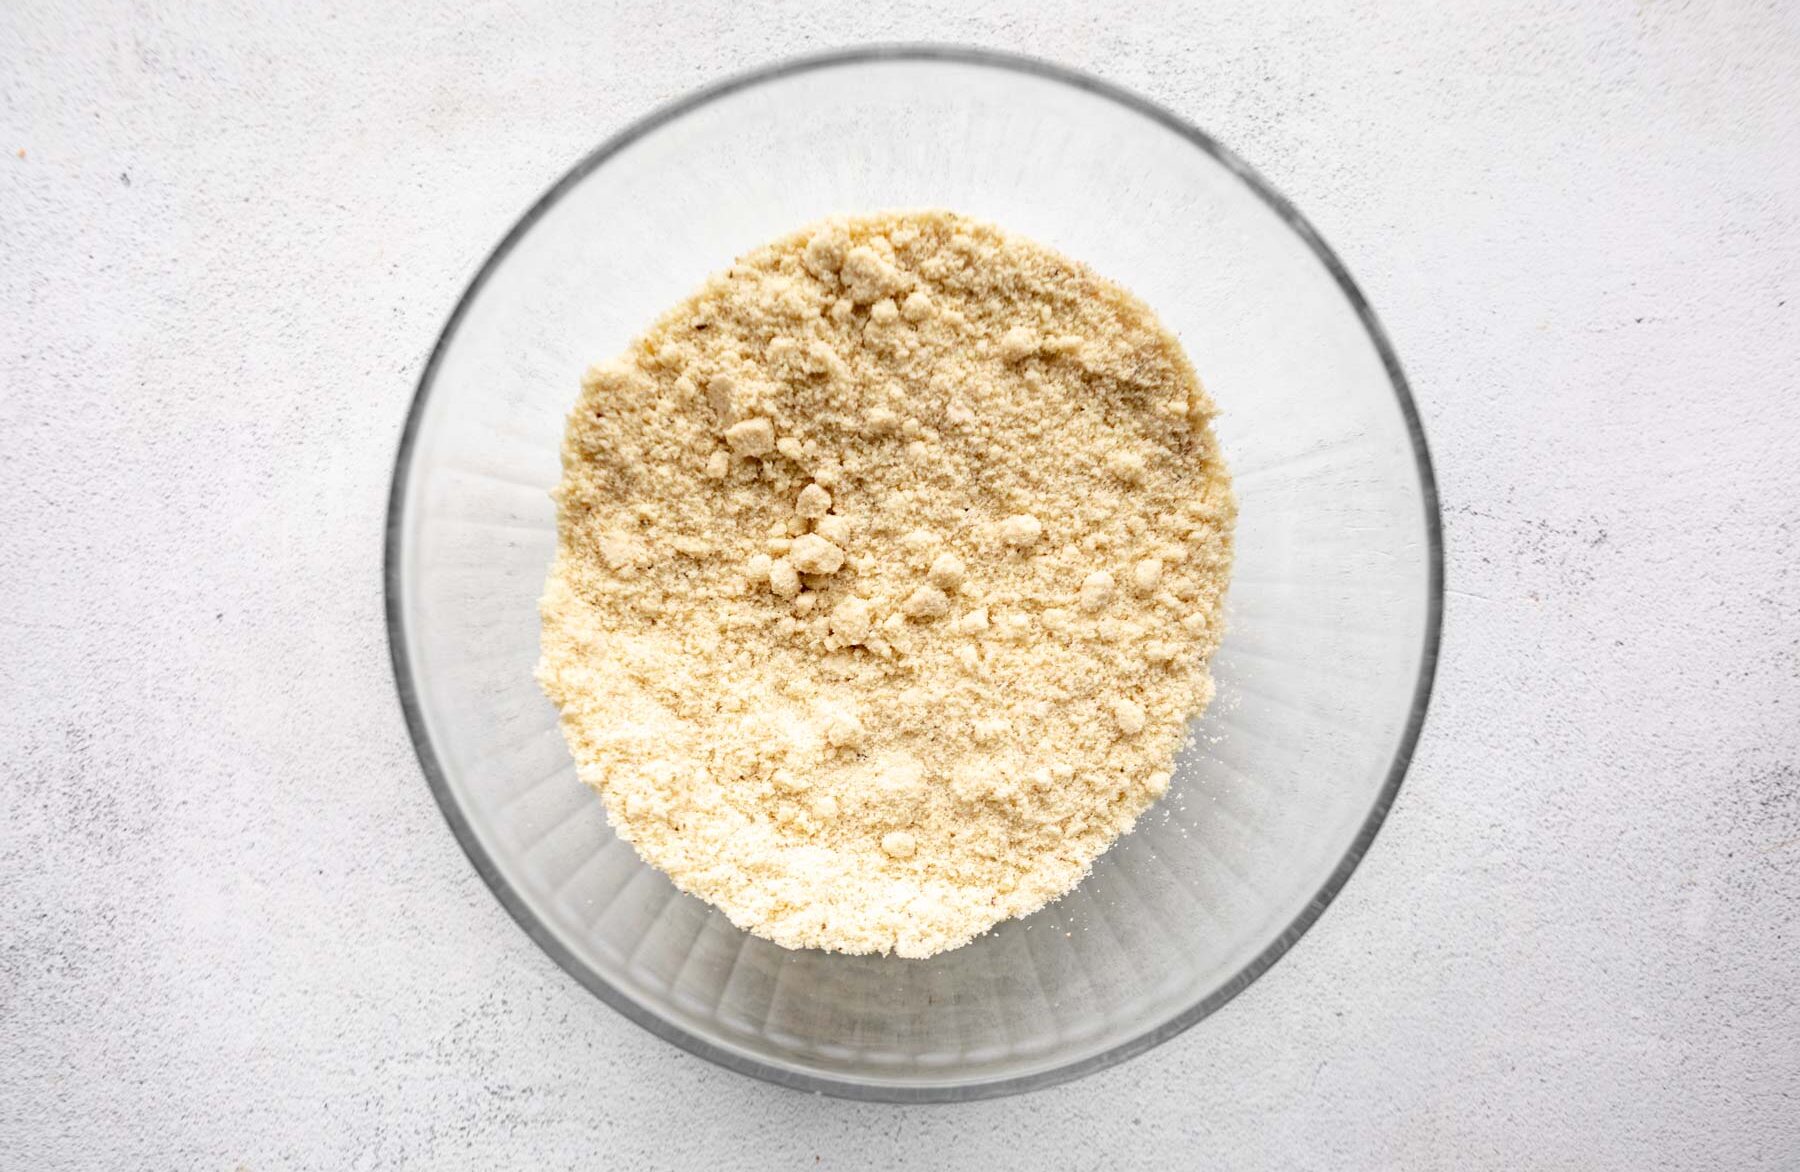 almond flour in a glass bowl.